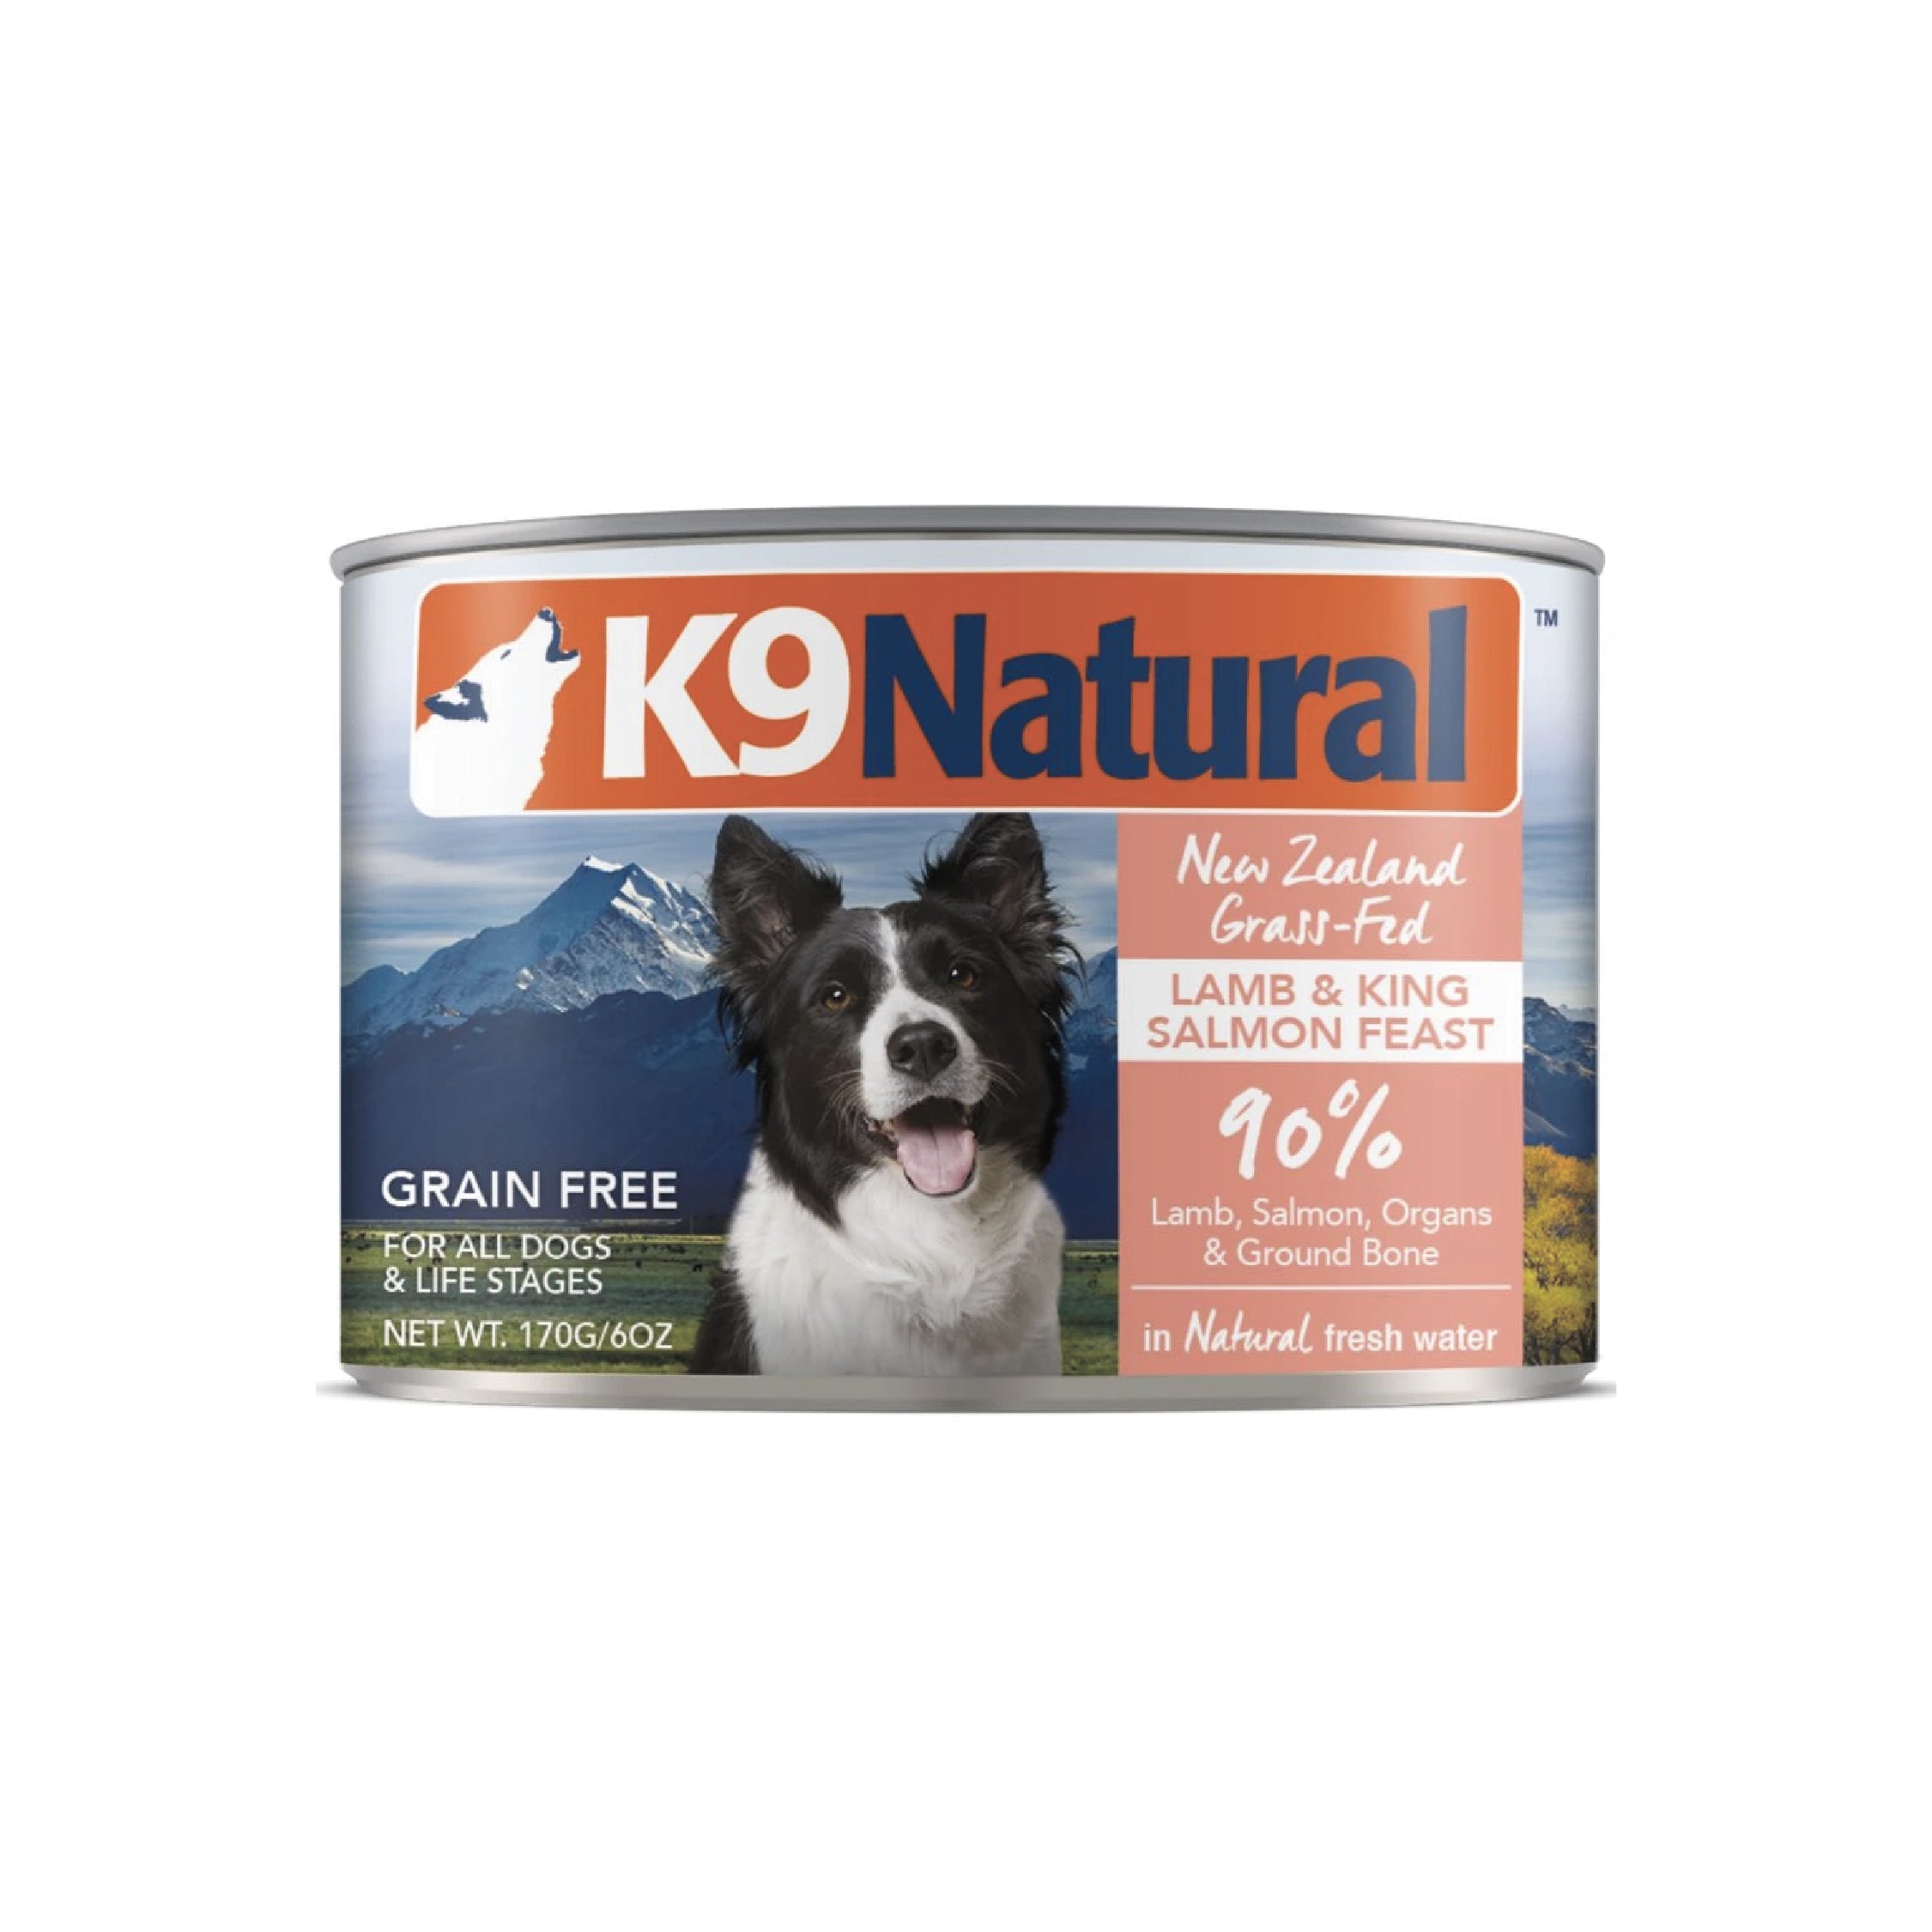 K9 Natural Lamb & King Salmon Feast Grain-Free Canned Dog Food